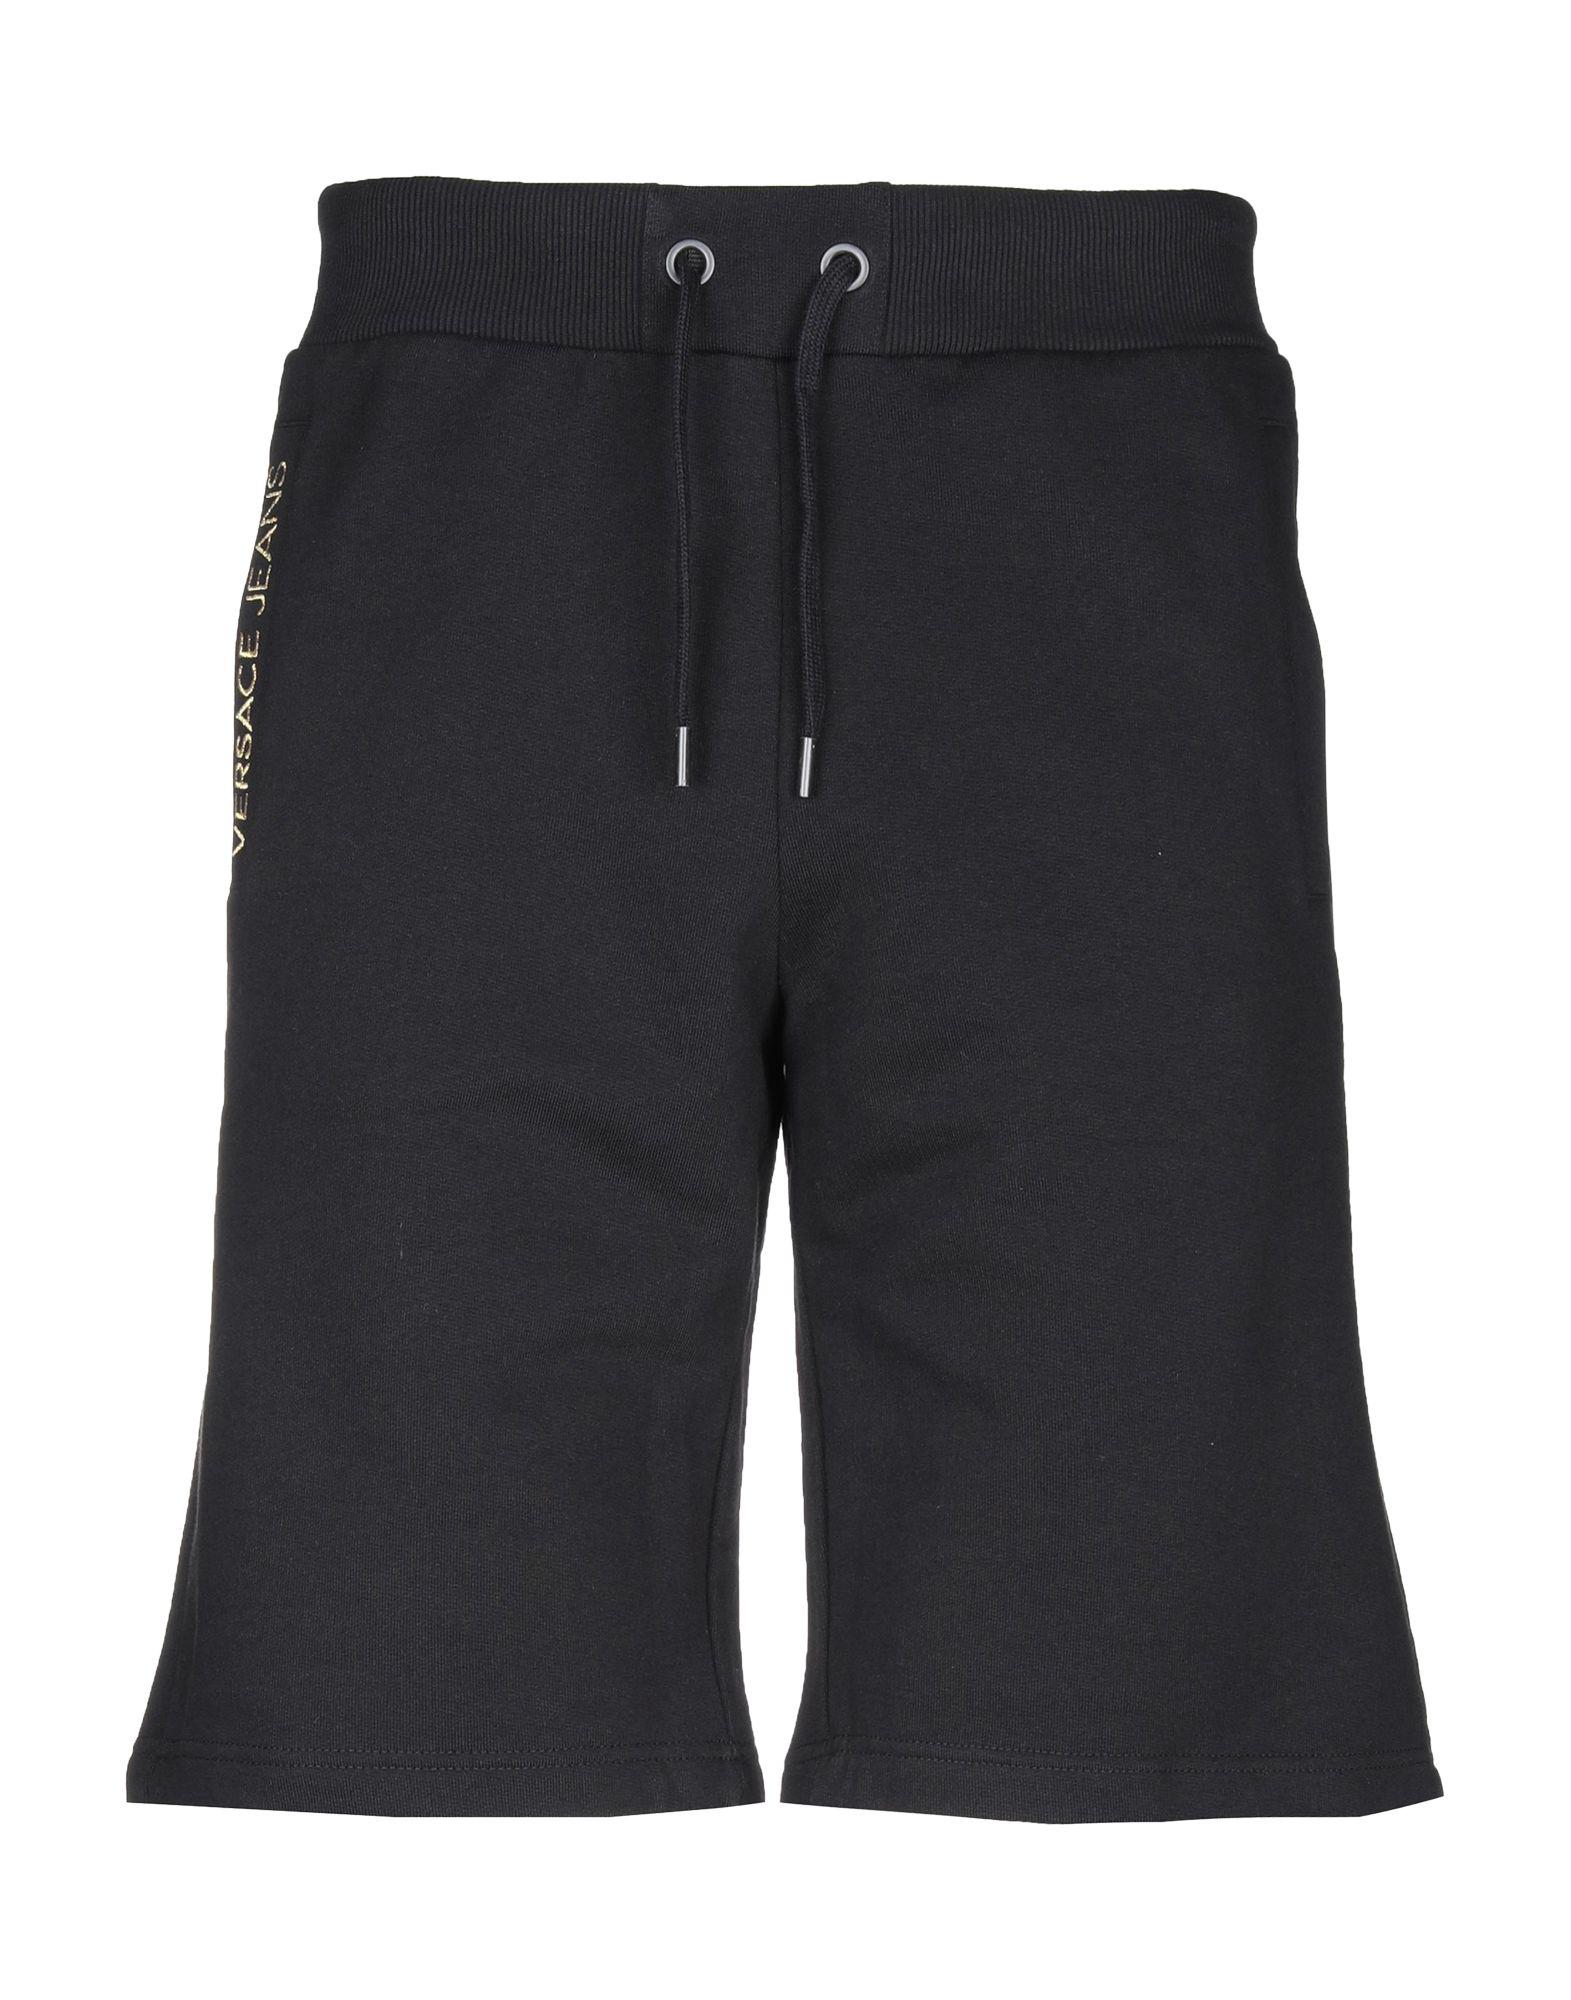 Versace Jeans Fleece Bermuda Shorts in Black for Men - Lyst